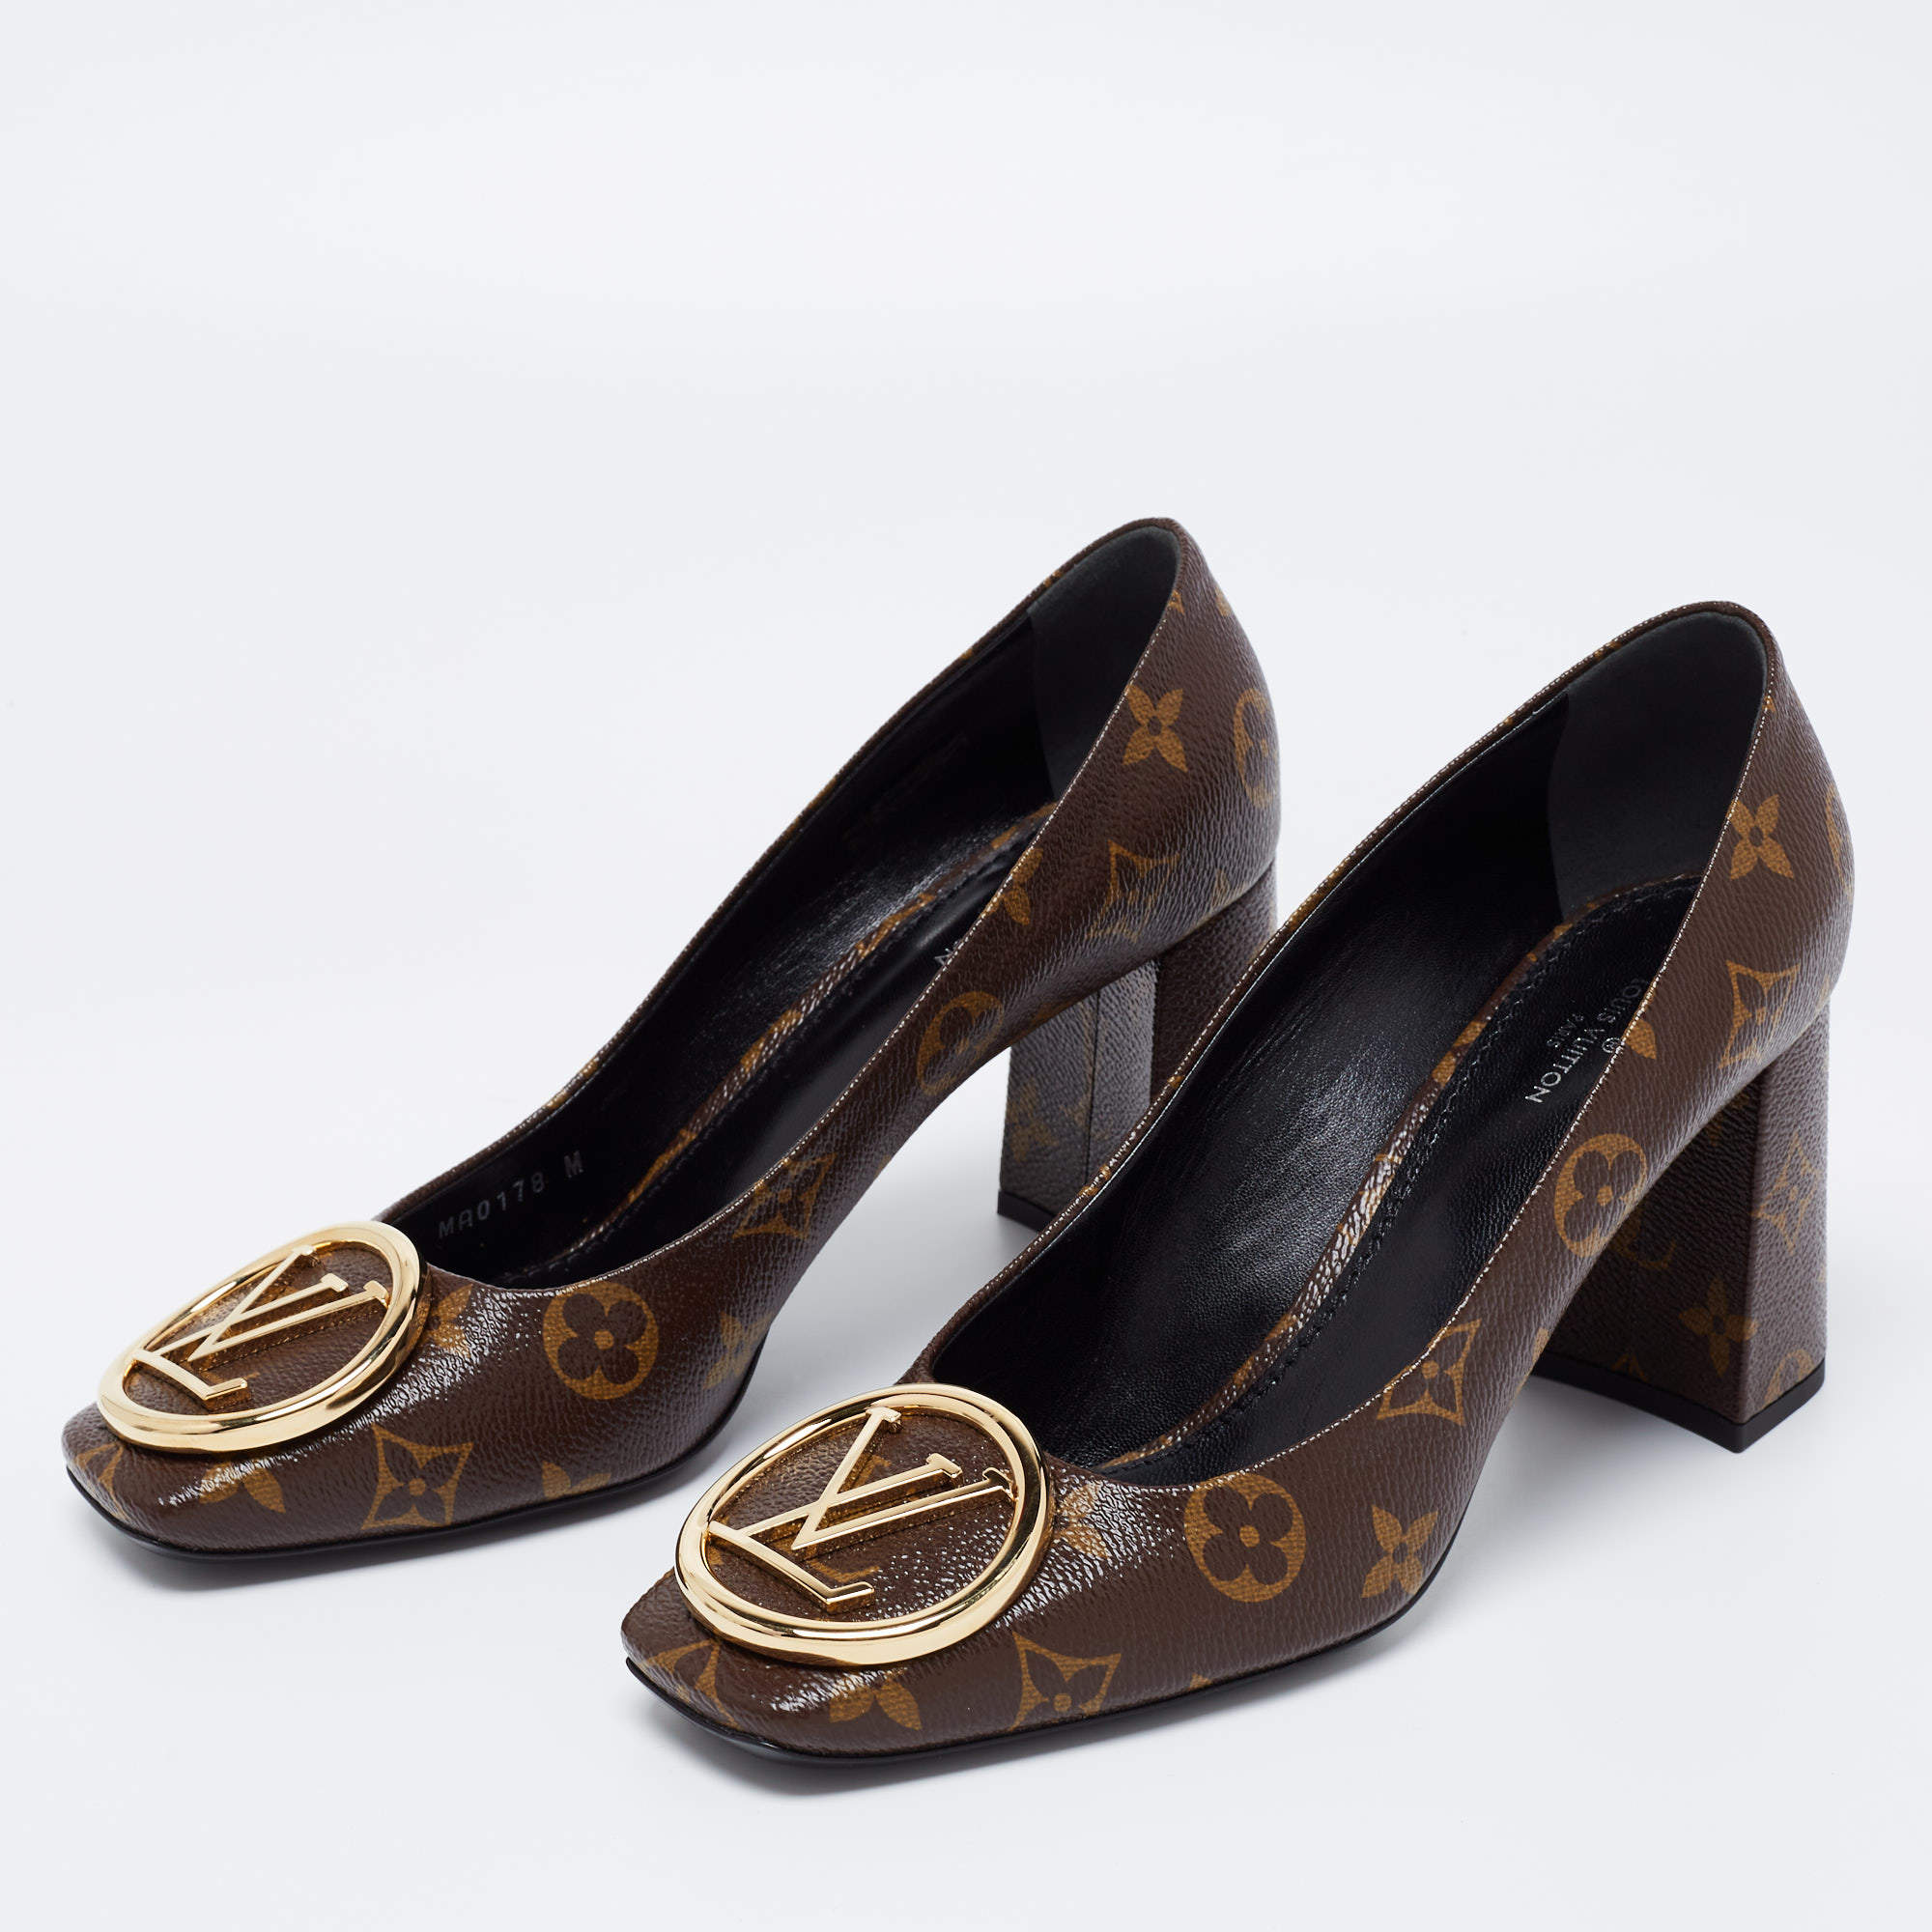 Louis Vuitton, Shoes, The Fabulous Lv Madeleine Pumps From Louis Vuitton